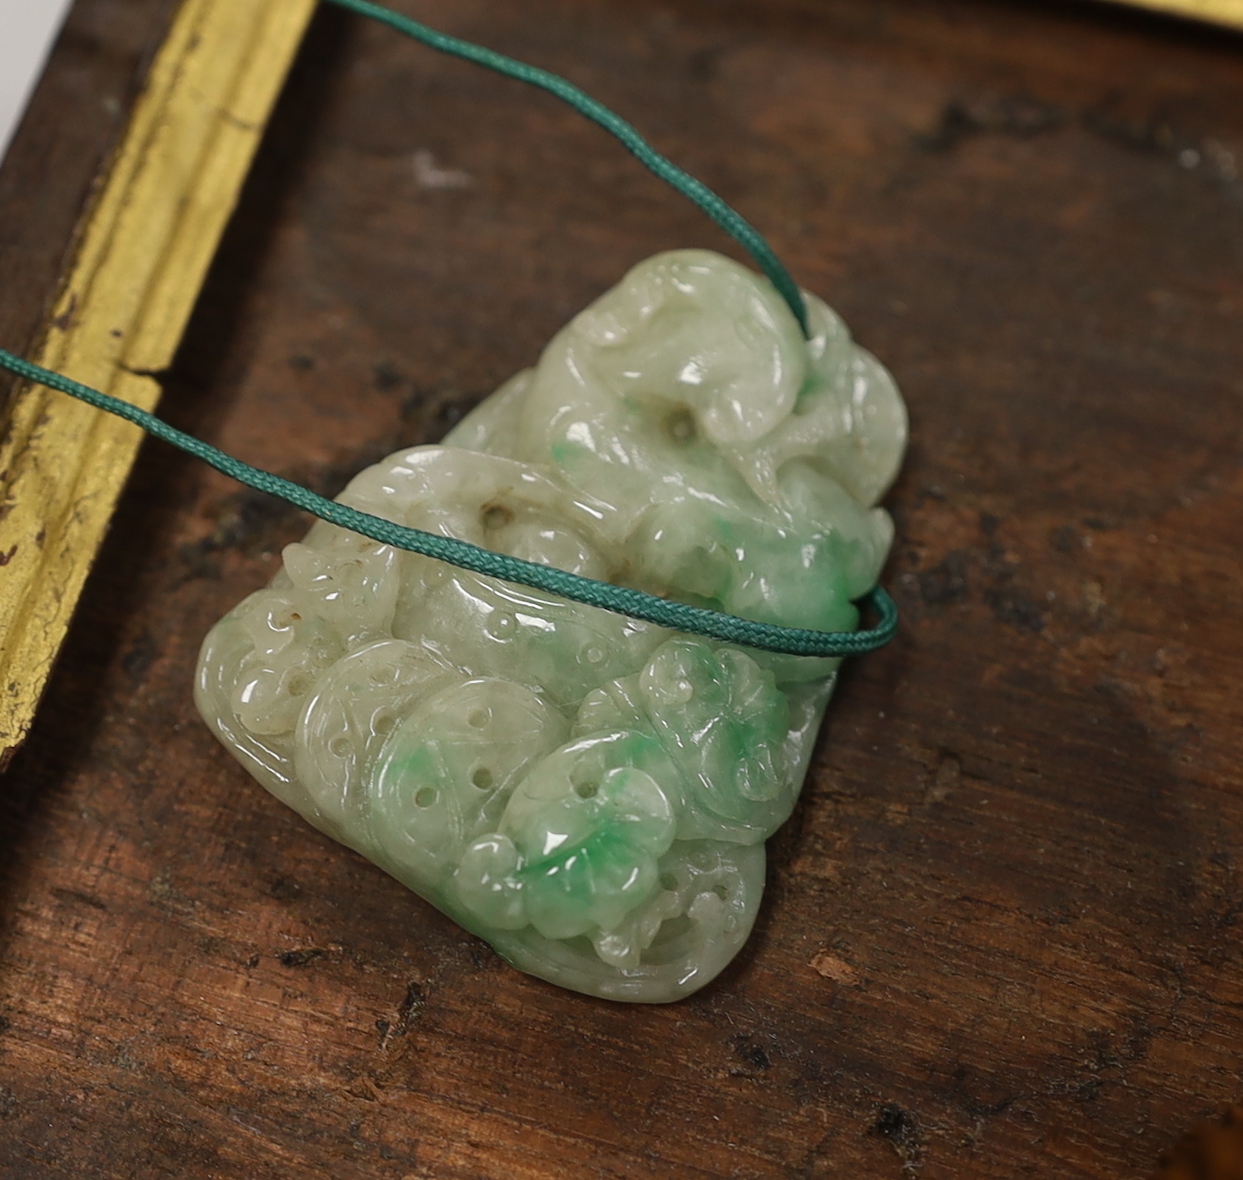 Five Chinese jadeite pendants and two wood lion-dog netsuke, netsuke 3.5 high